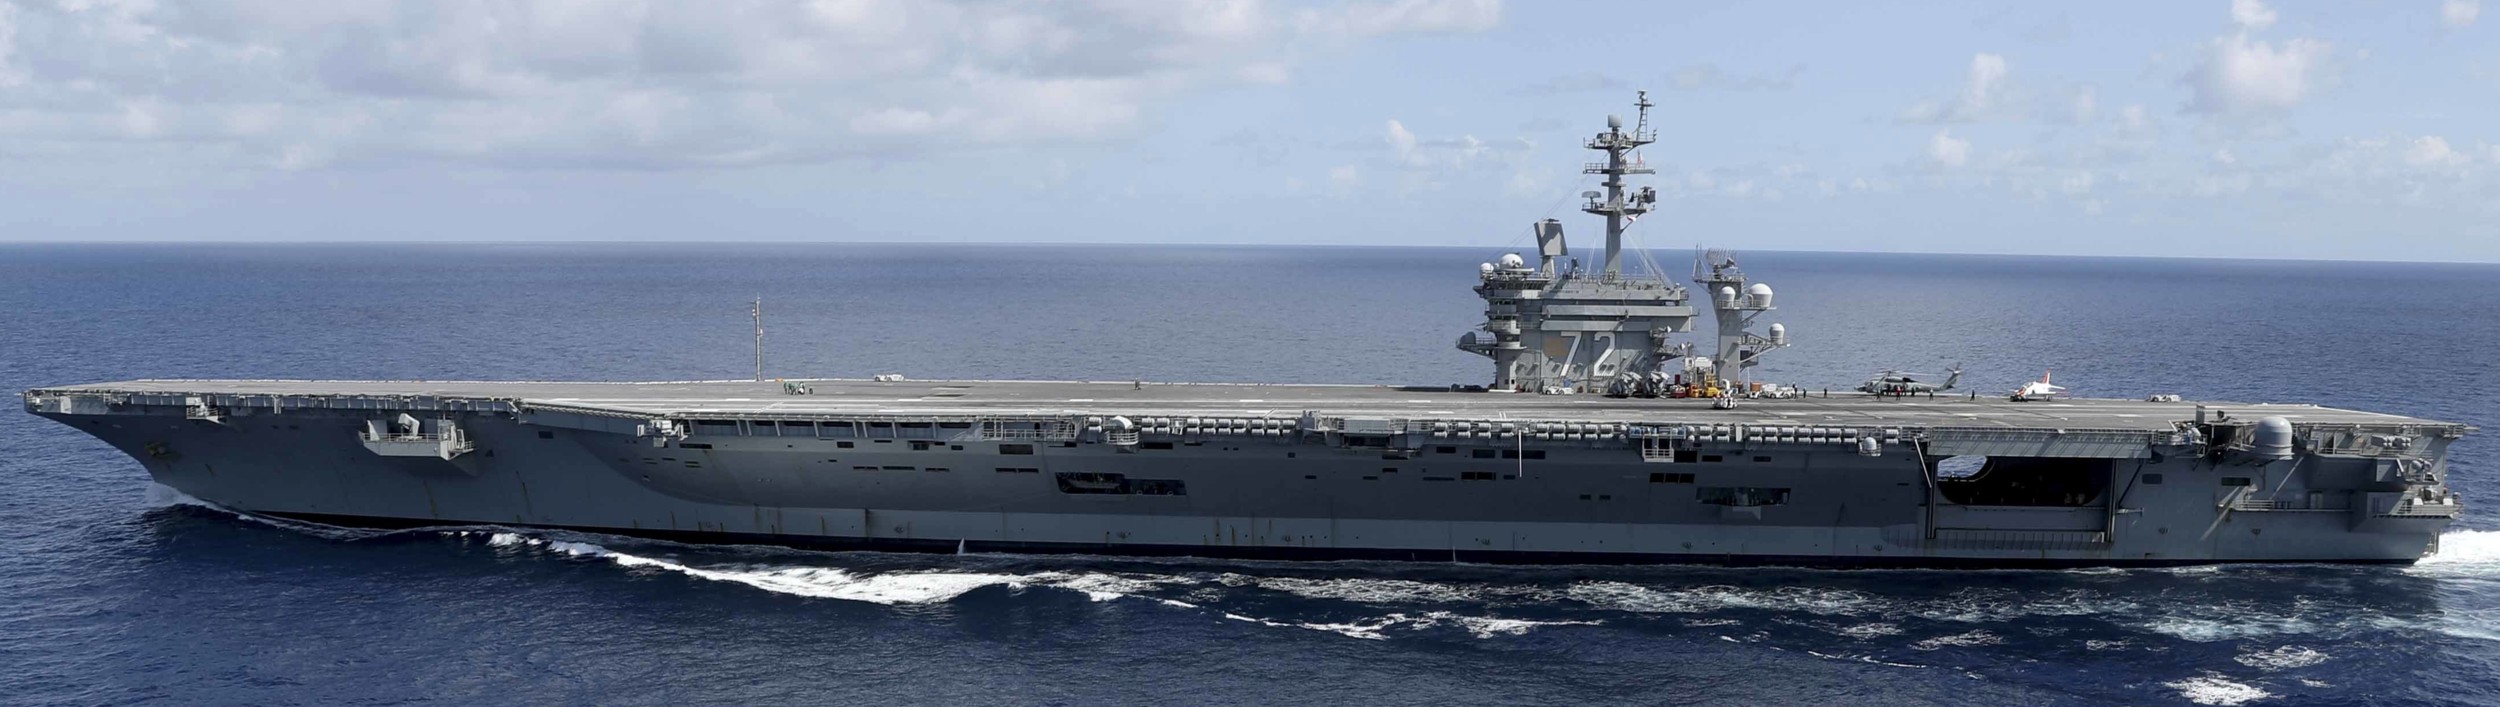 cvn-72 uss abraham lincoln nimitz class aircraft carrier us navy 51 atlantic ocean